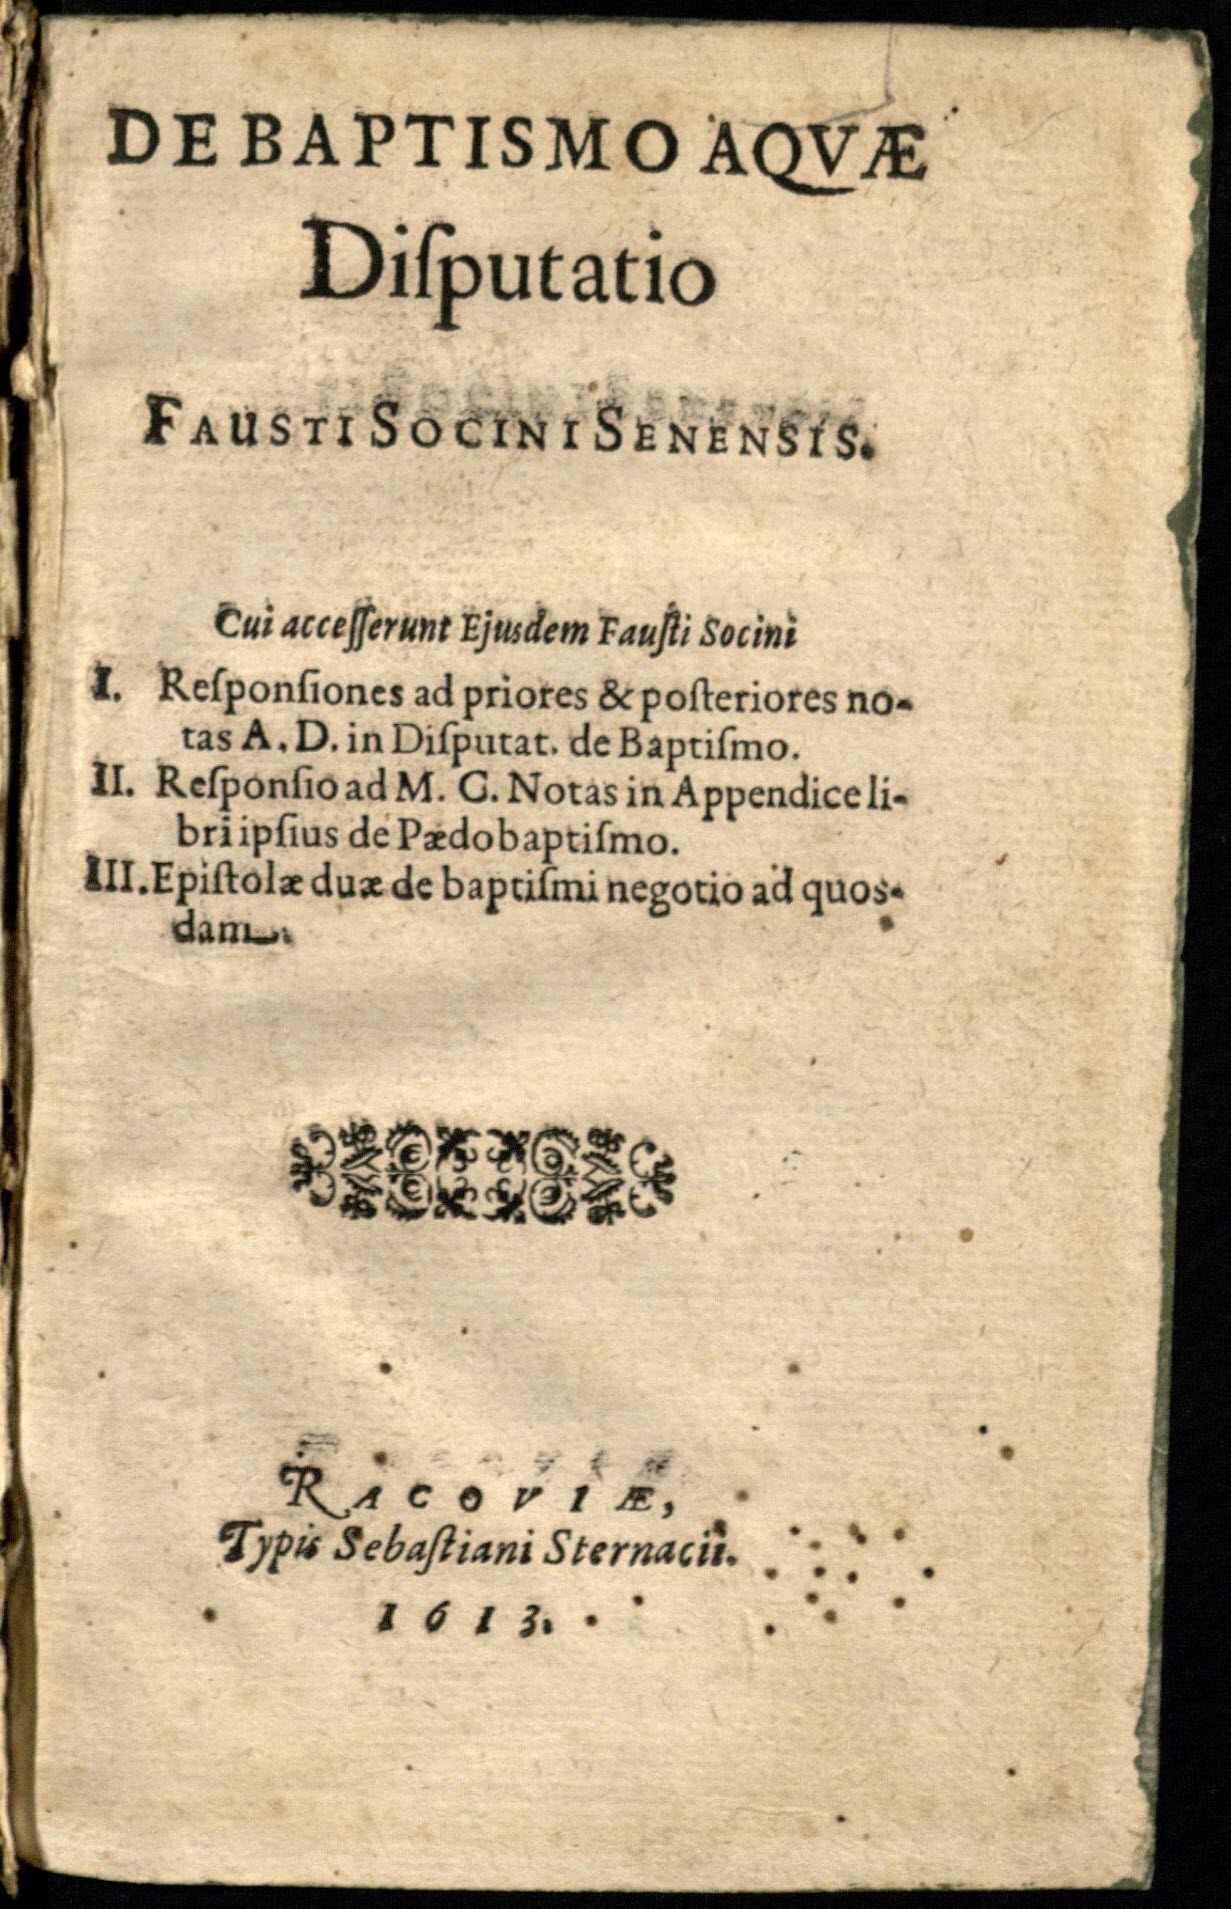 Sozzini, Fausto Paolo (1539–1604). De baptismo aquae disputatio (1613)